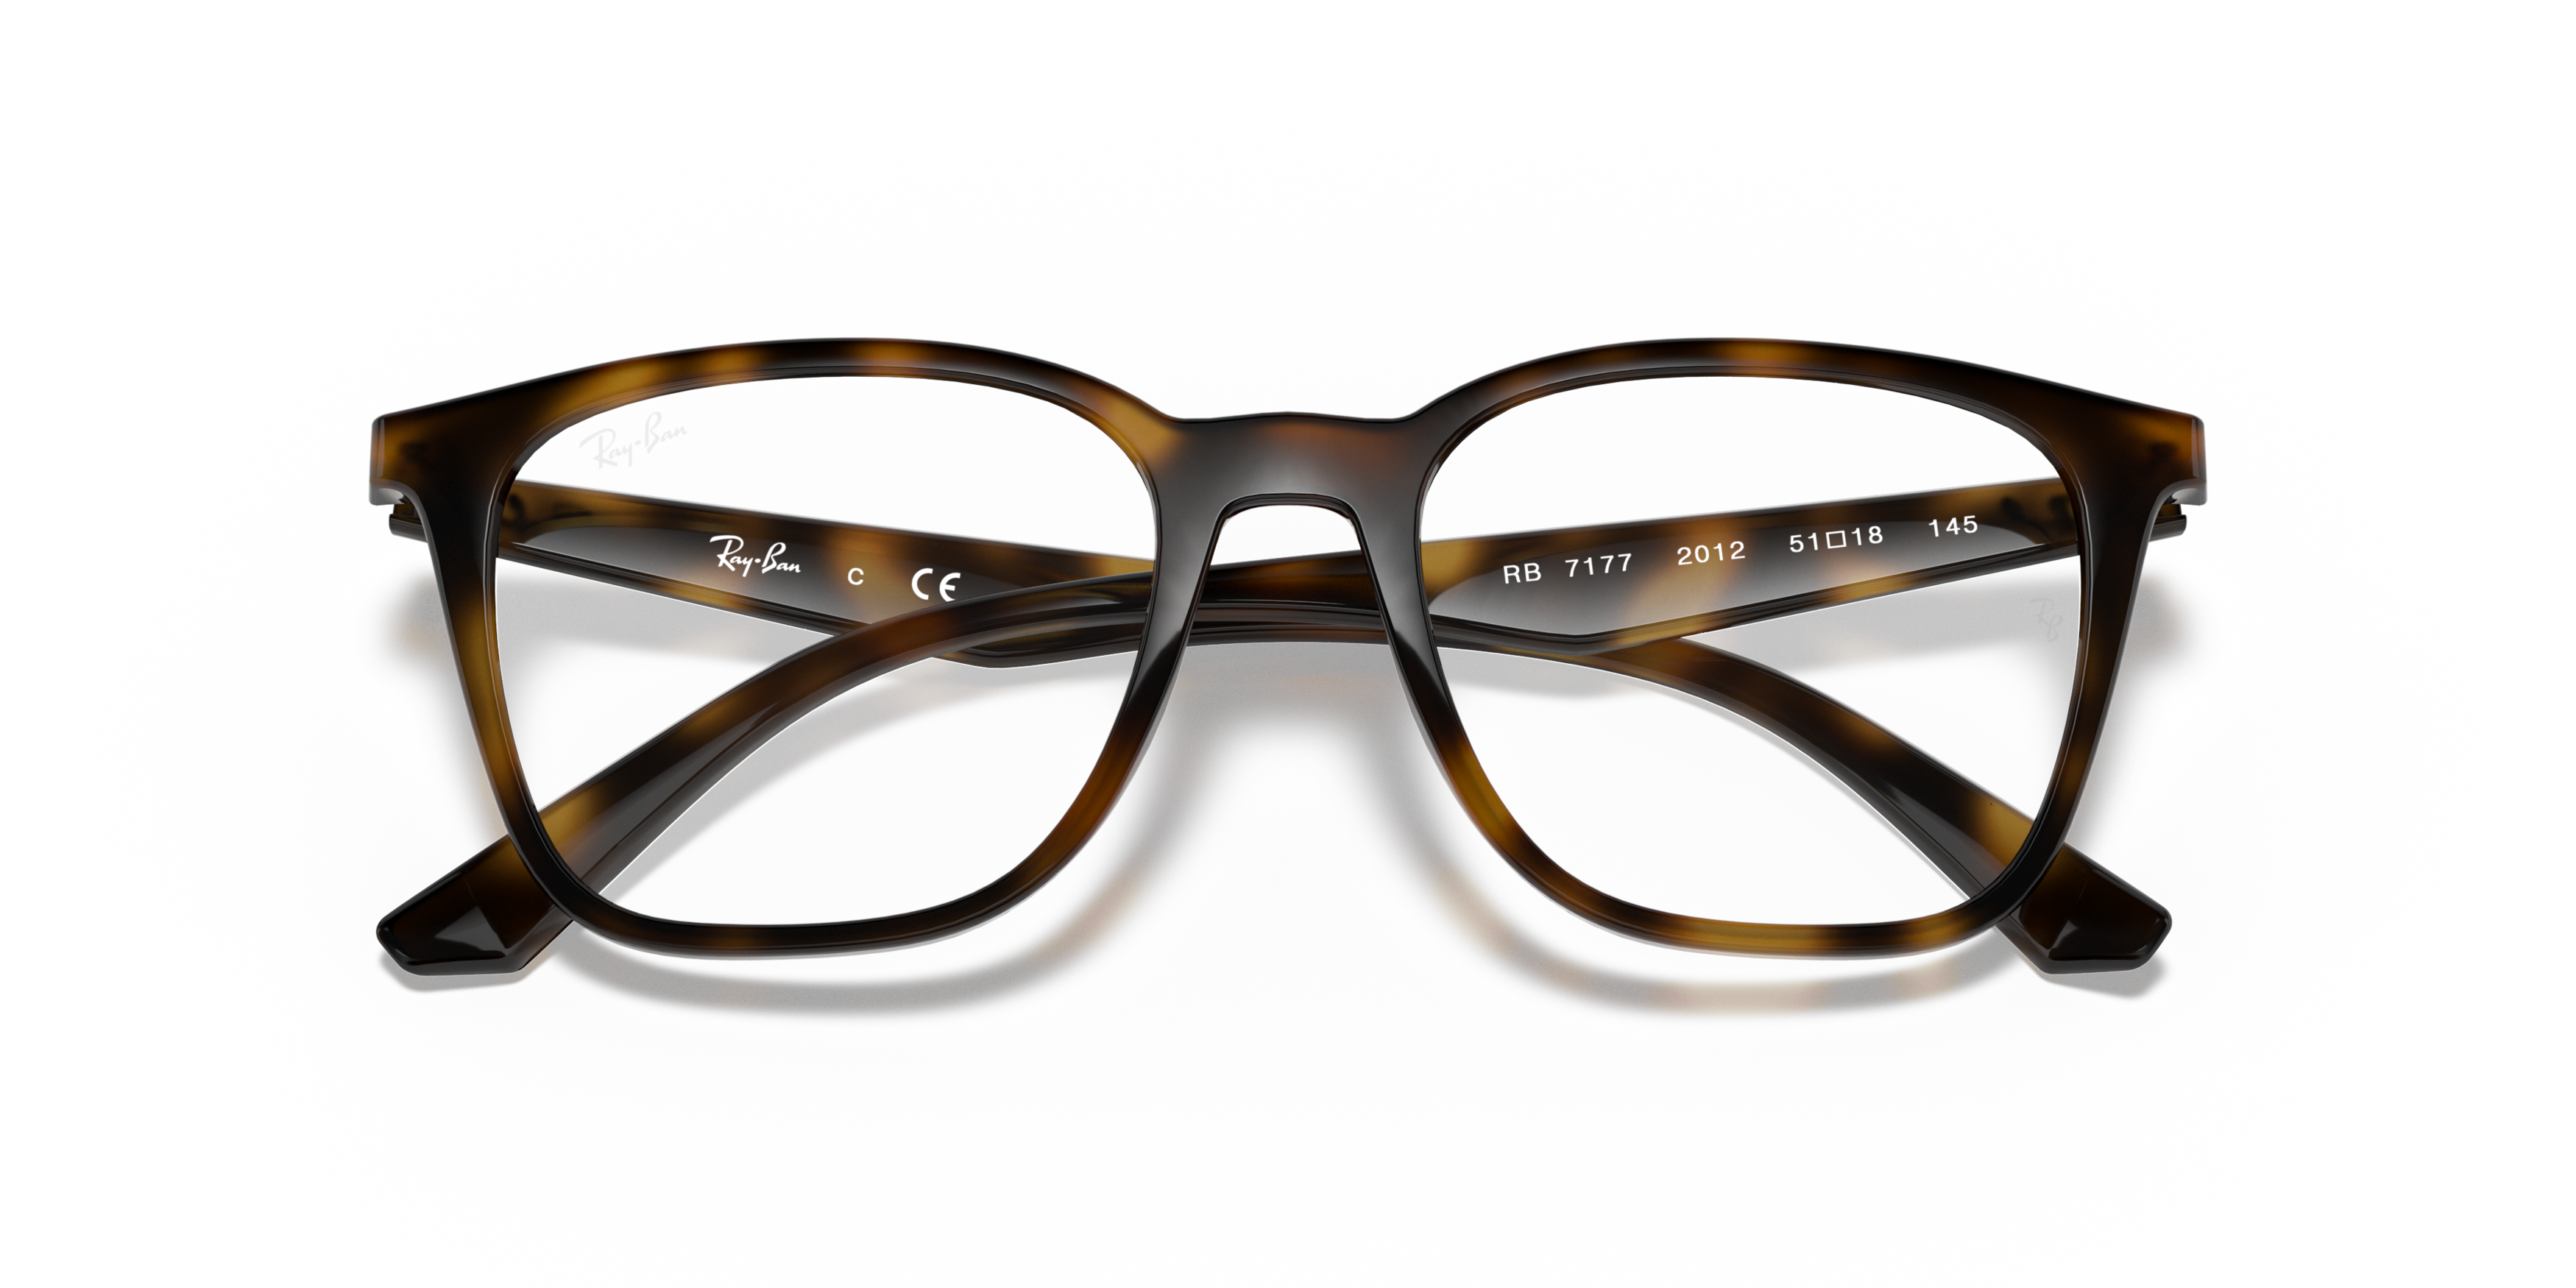 Folded Ray-Ban RX 7177 Glasses Transparent / Tortoise Shell